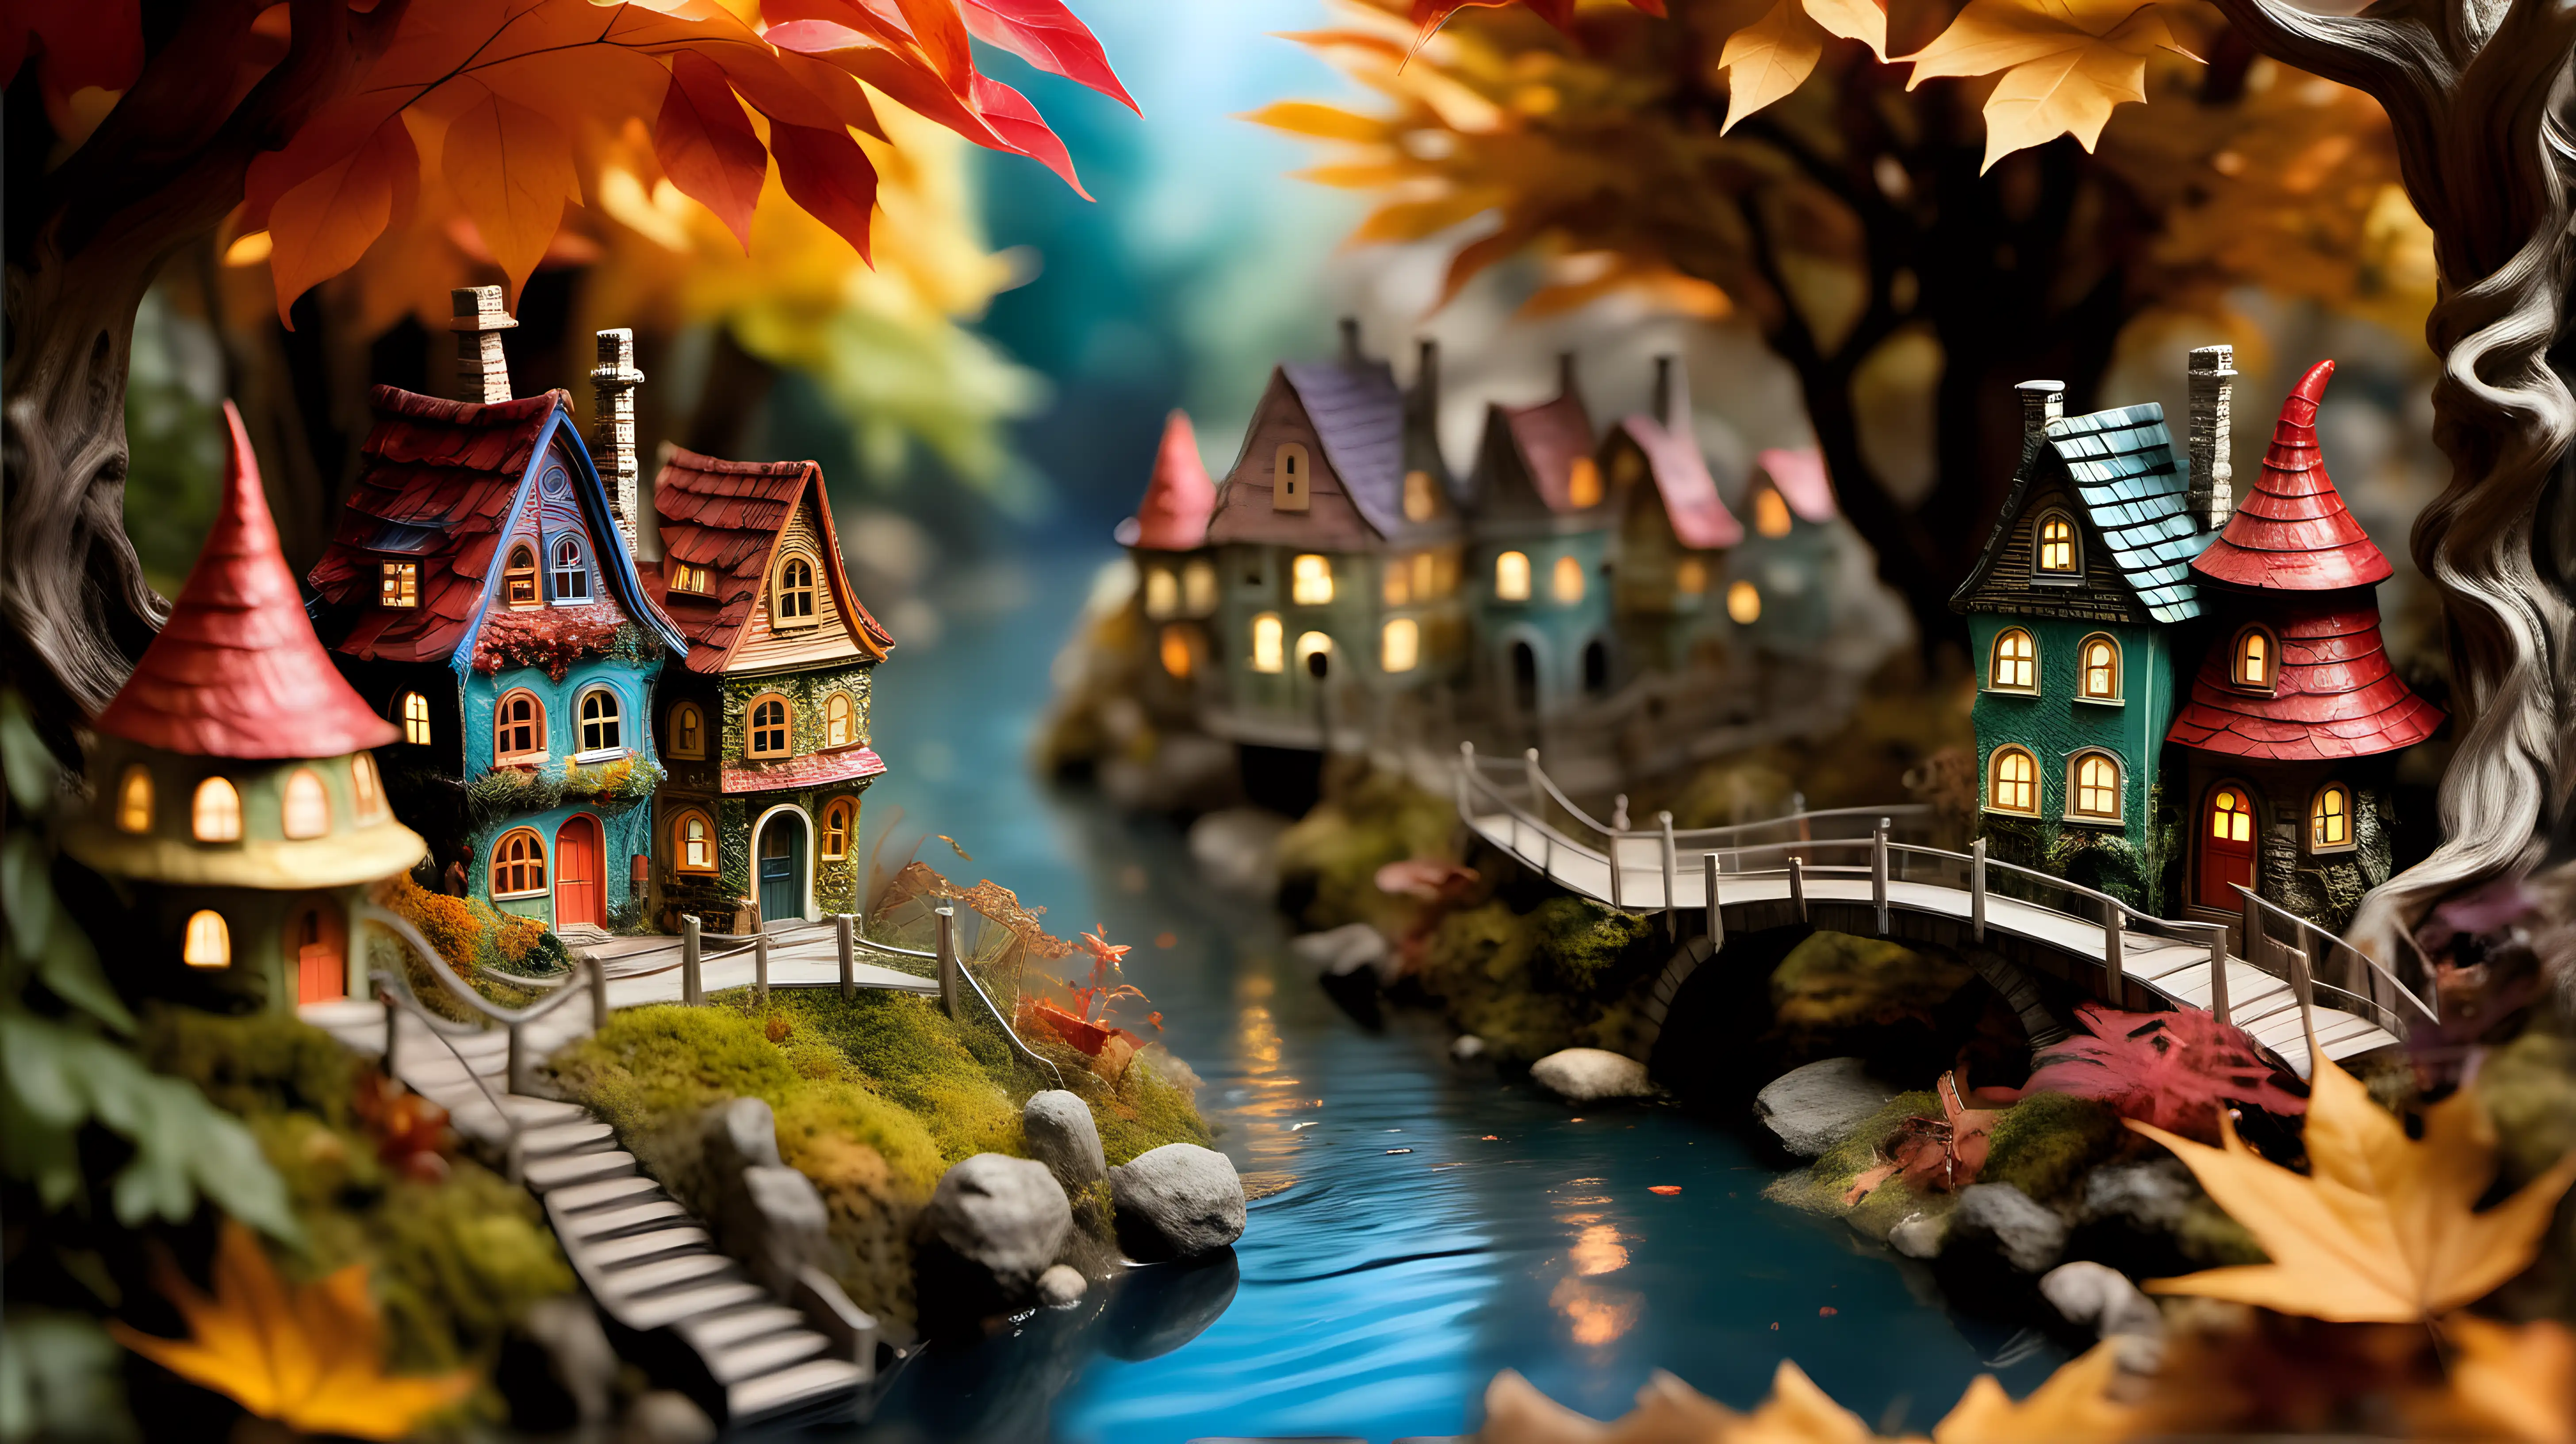 Enchanting Fairy Cityscape in Autumn Splendor